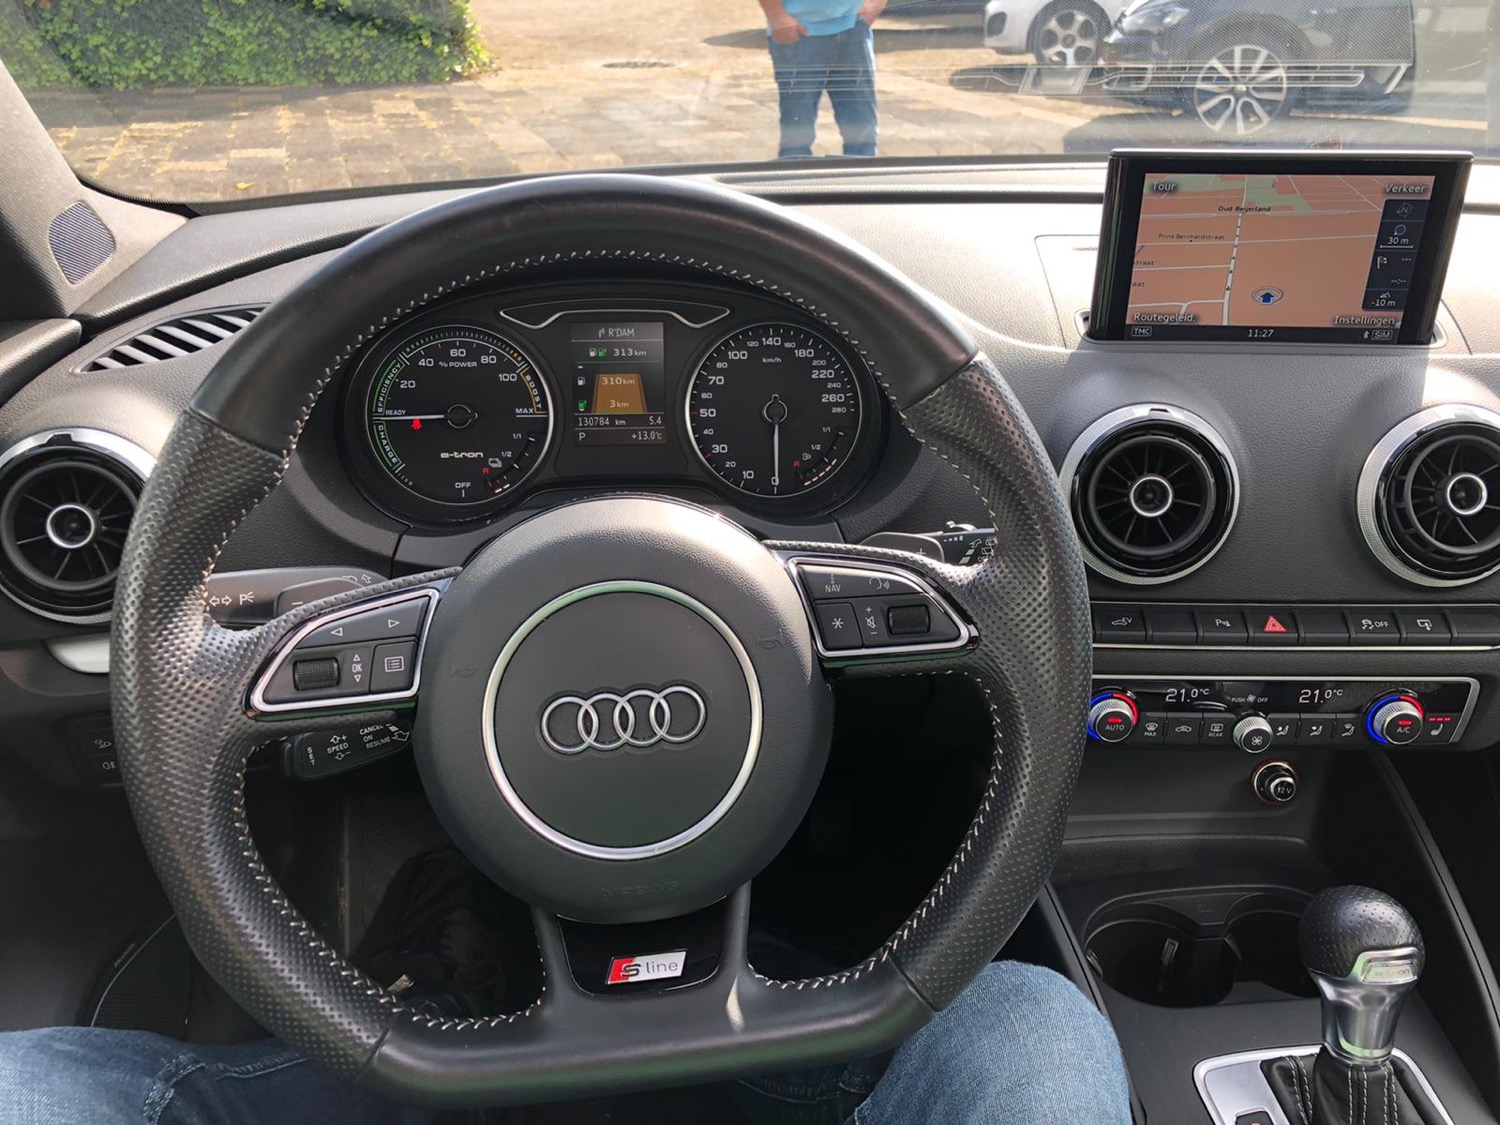 repertoire Datum spreker Audi A3 sportback E-tron S-line ex btw – Schipper Auto's